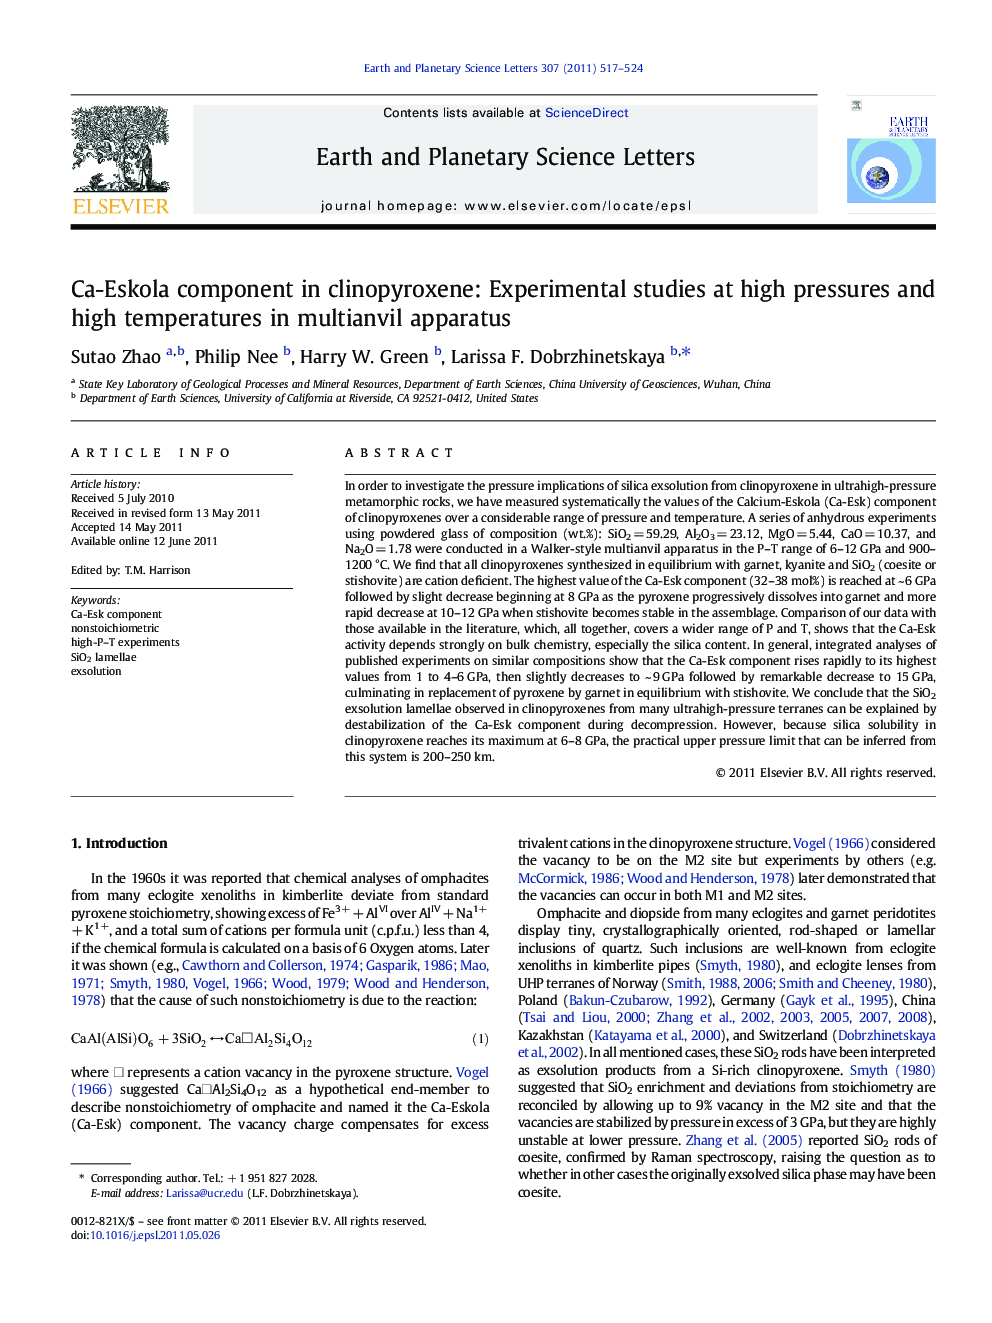 Ca-Eskola component in clinopyroxene: Experimental studies at high pressures and high temperatures in multianvil apparatus